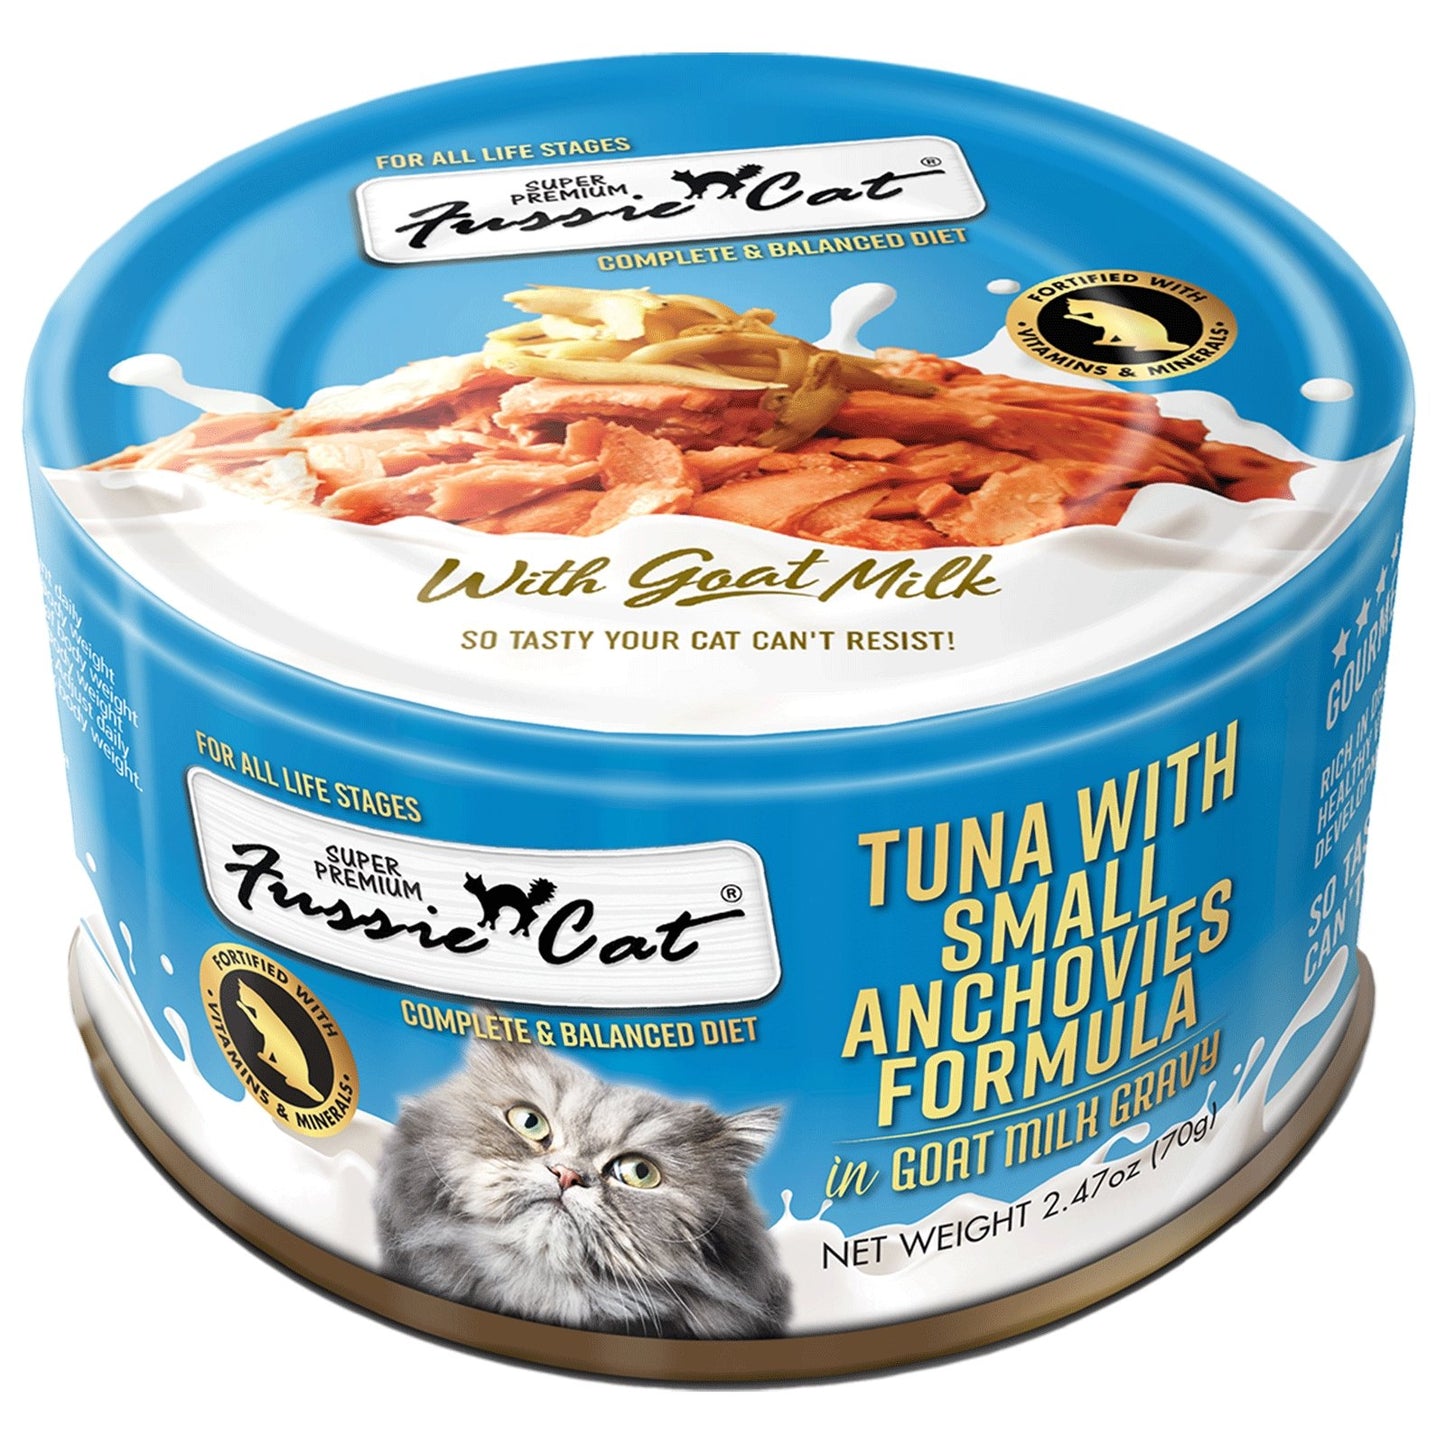 Fussie Cat Super Premium Canned Cat Food with Goat Milk TUNA & SMALL ANCHOVIES IN GOAT MILK